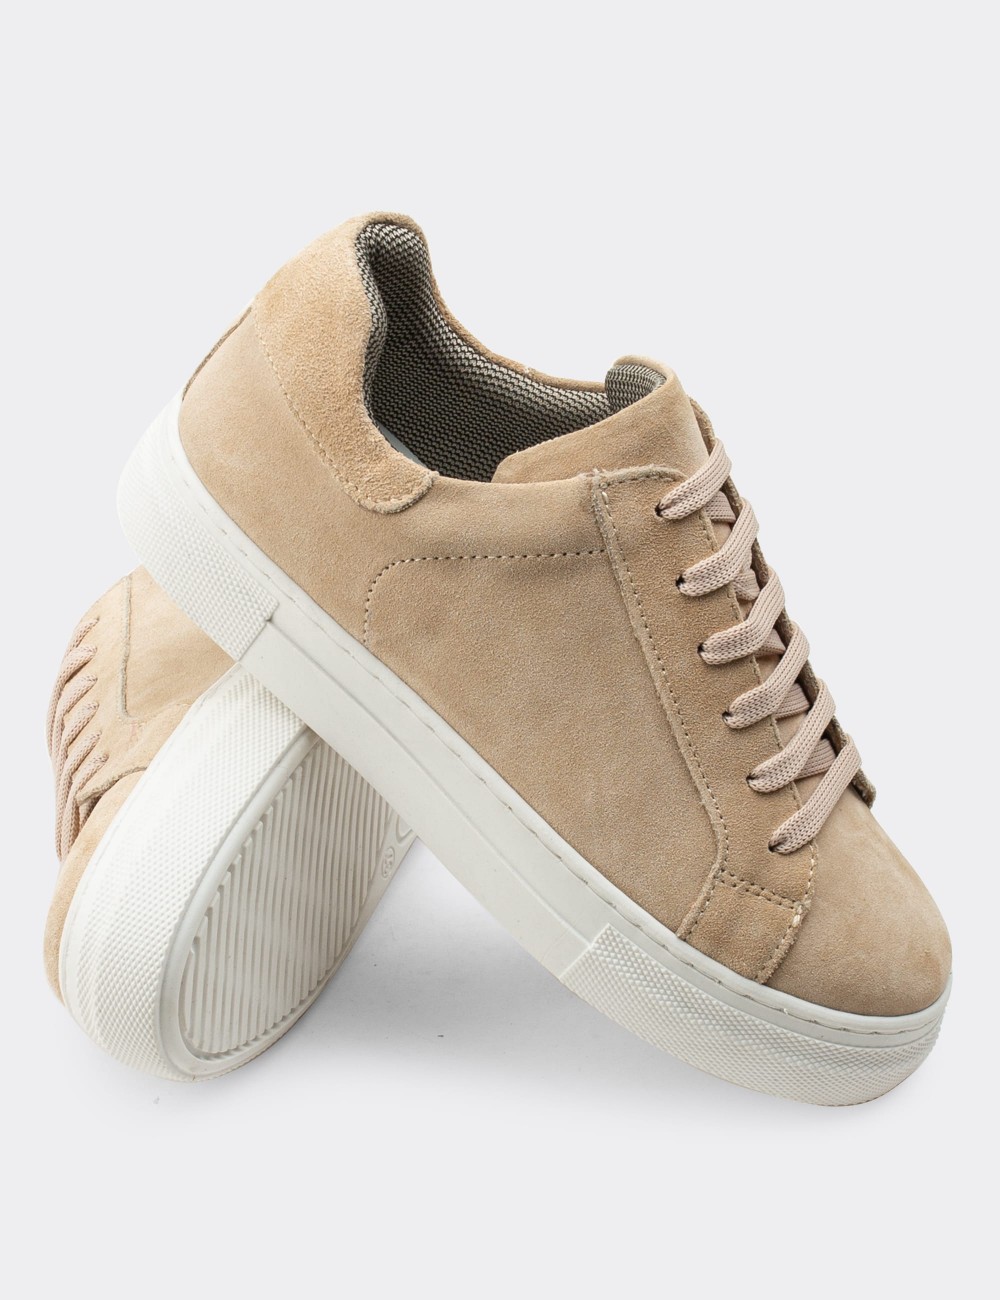 Women's Sneakers in Beige Suede / White Leather – KikkiLine Calzature